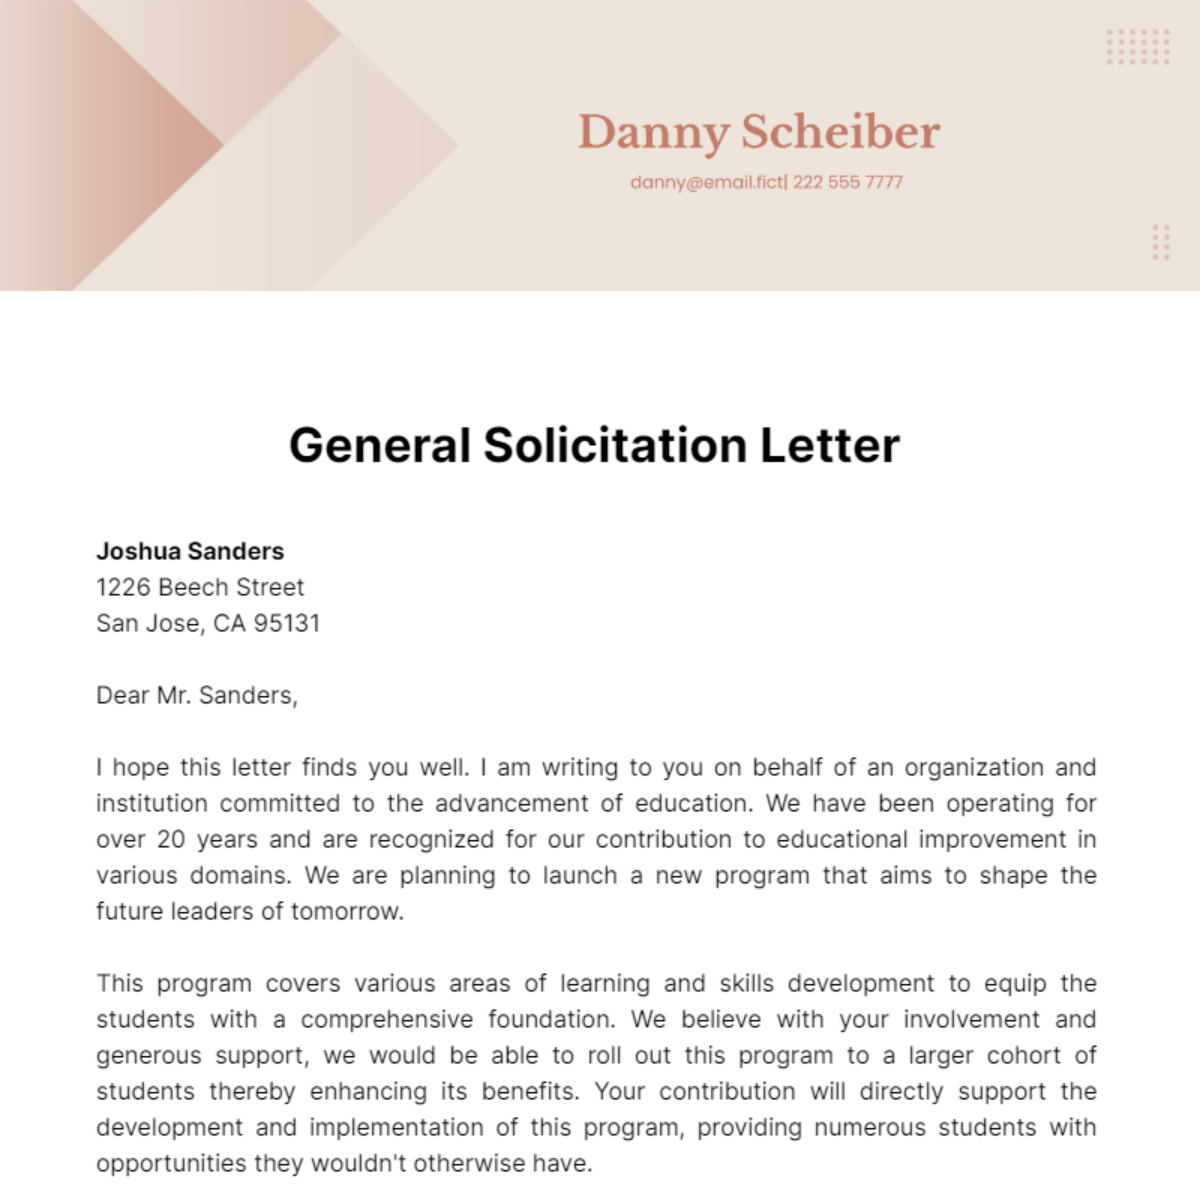 General Solicitation Letter Template